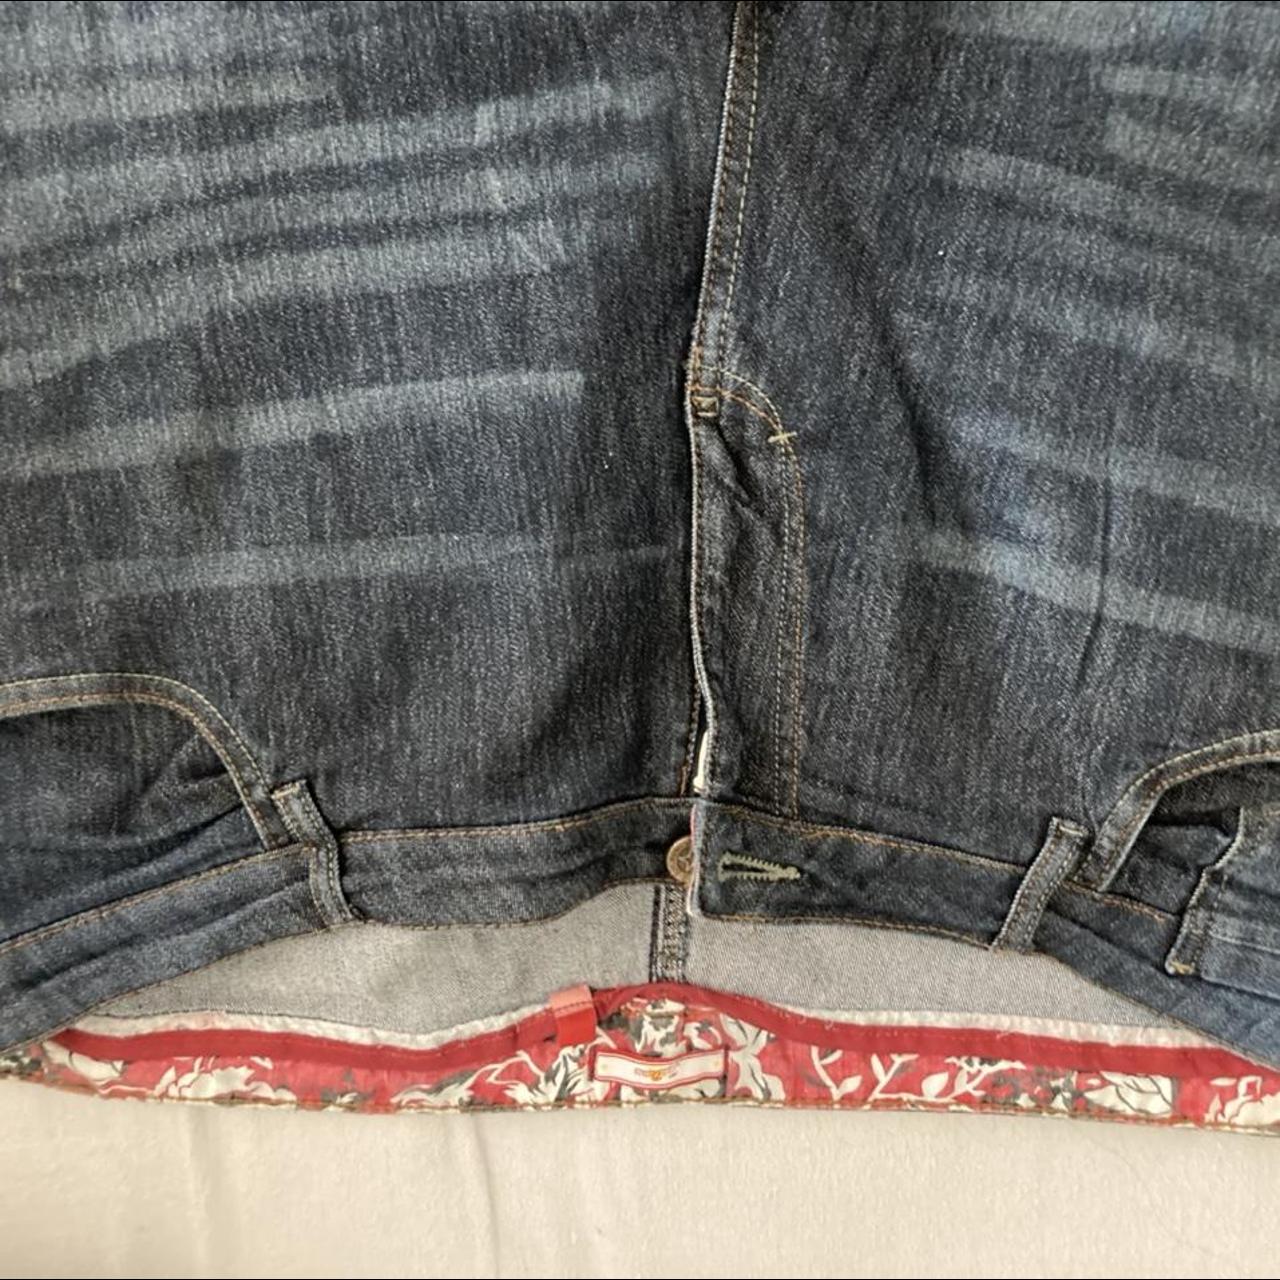 Product Image 1 - Plus size blue jeans, not